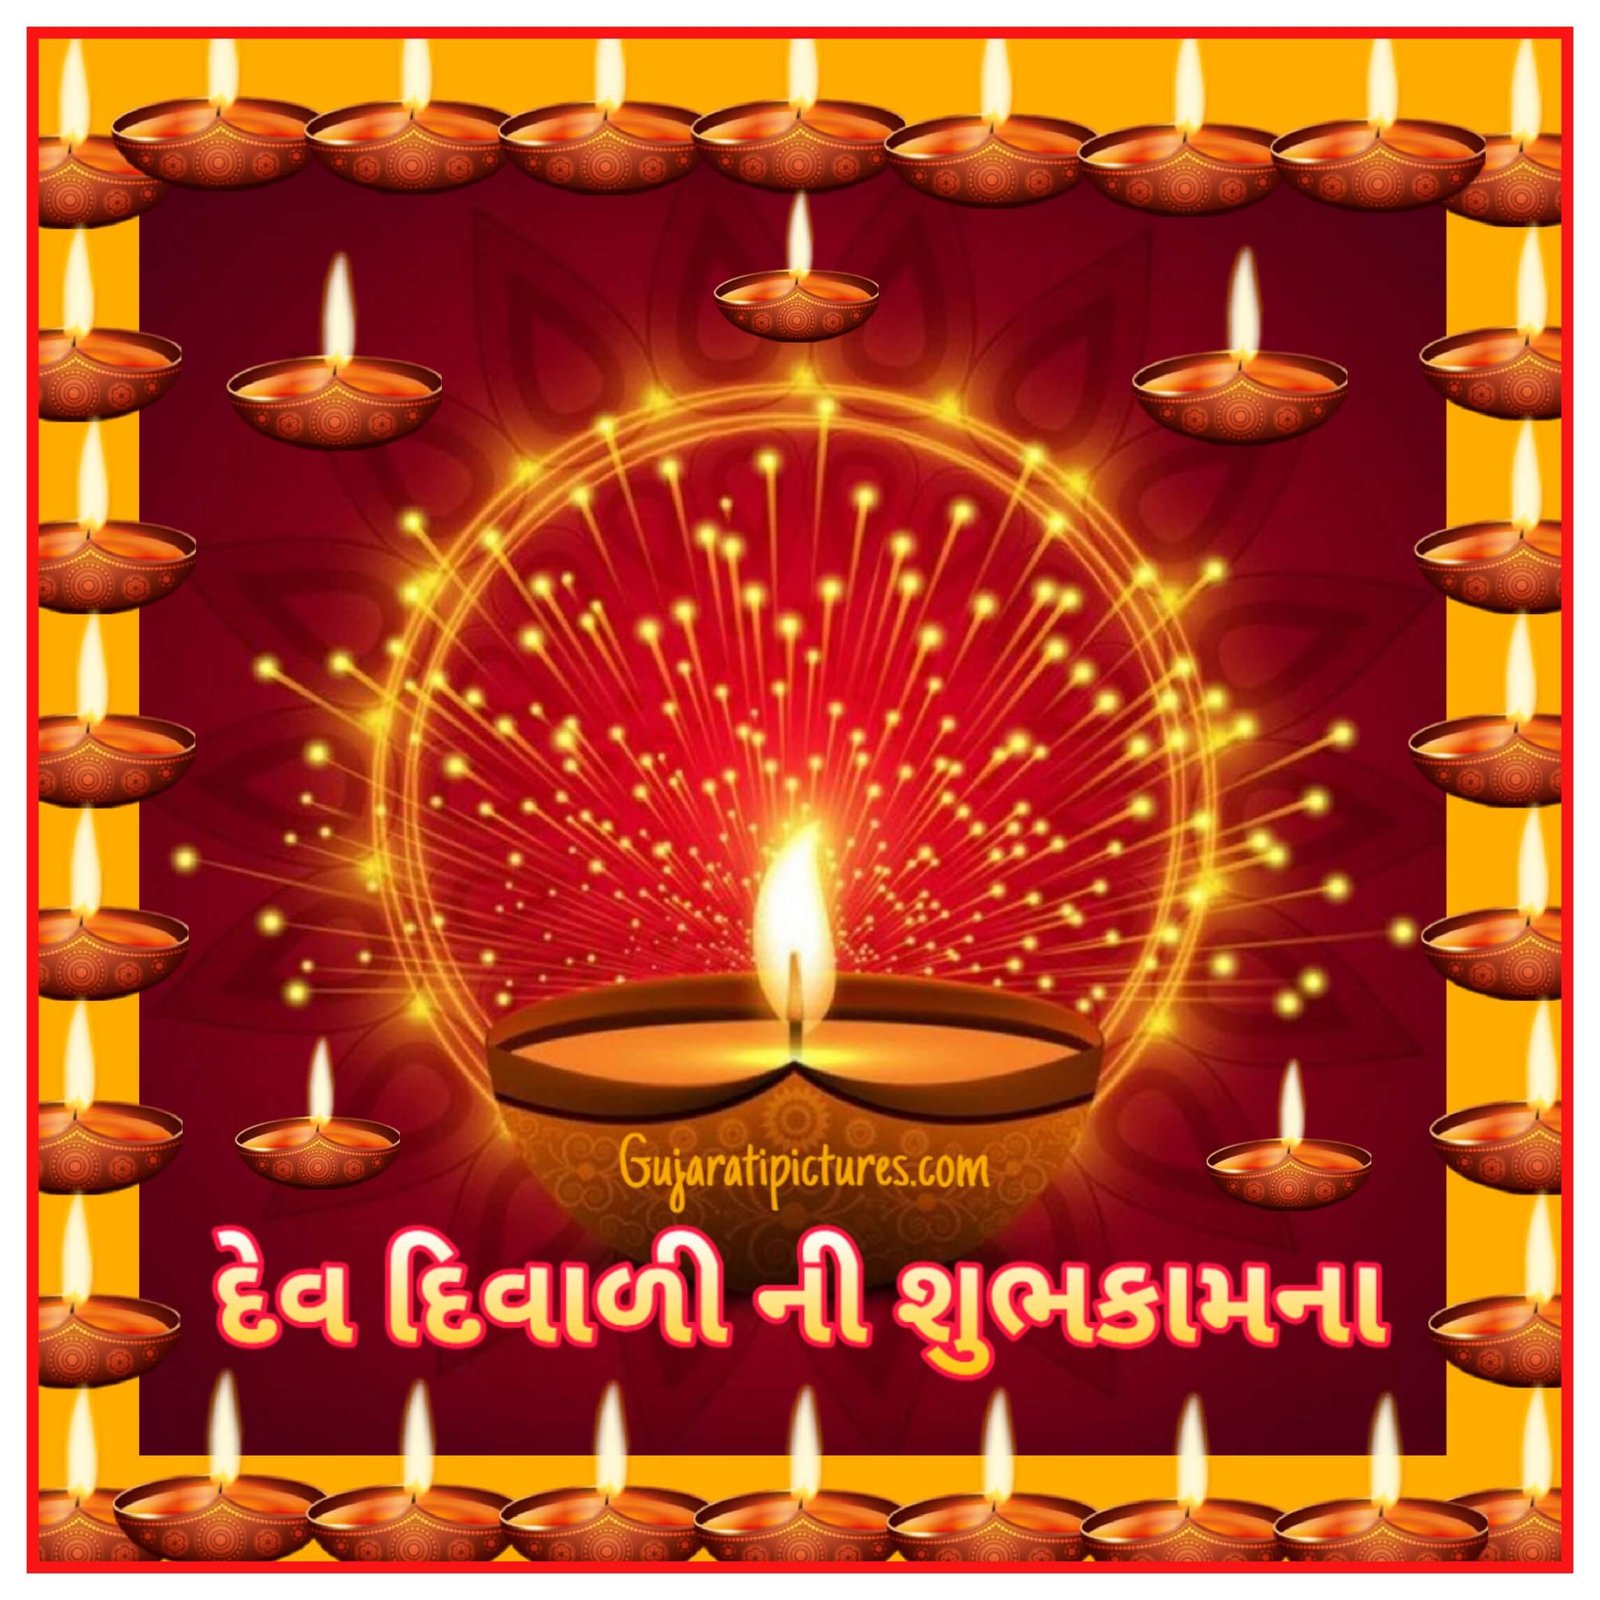 Dev Diwali ni Subhkamna Gujarati Pictures Website Dedicated to